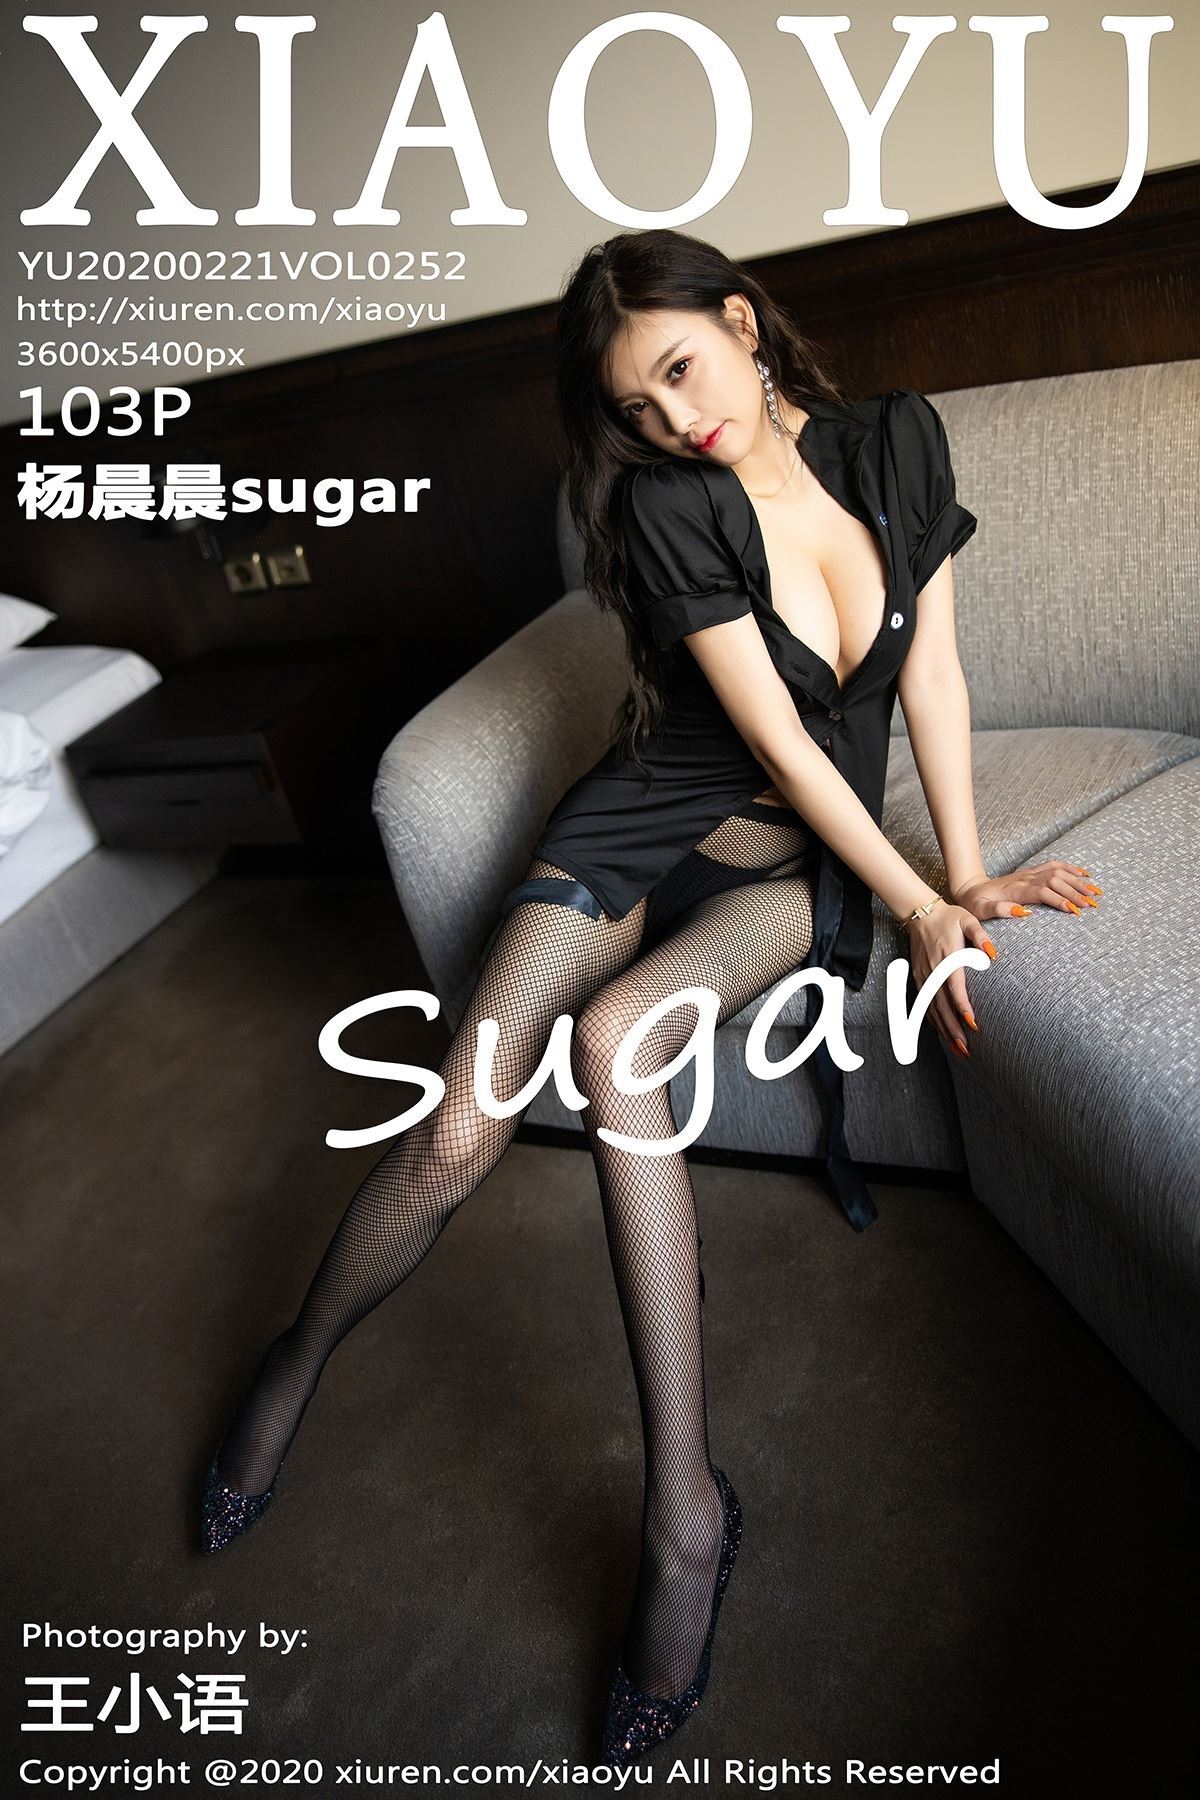 XIAOYU 语画界 2020.02.21 Vol.252 杨晨晨sugar